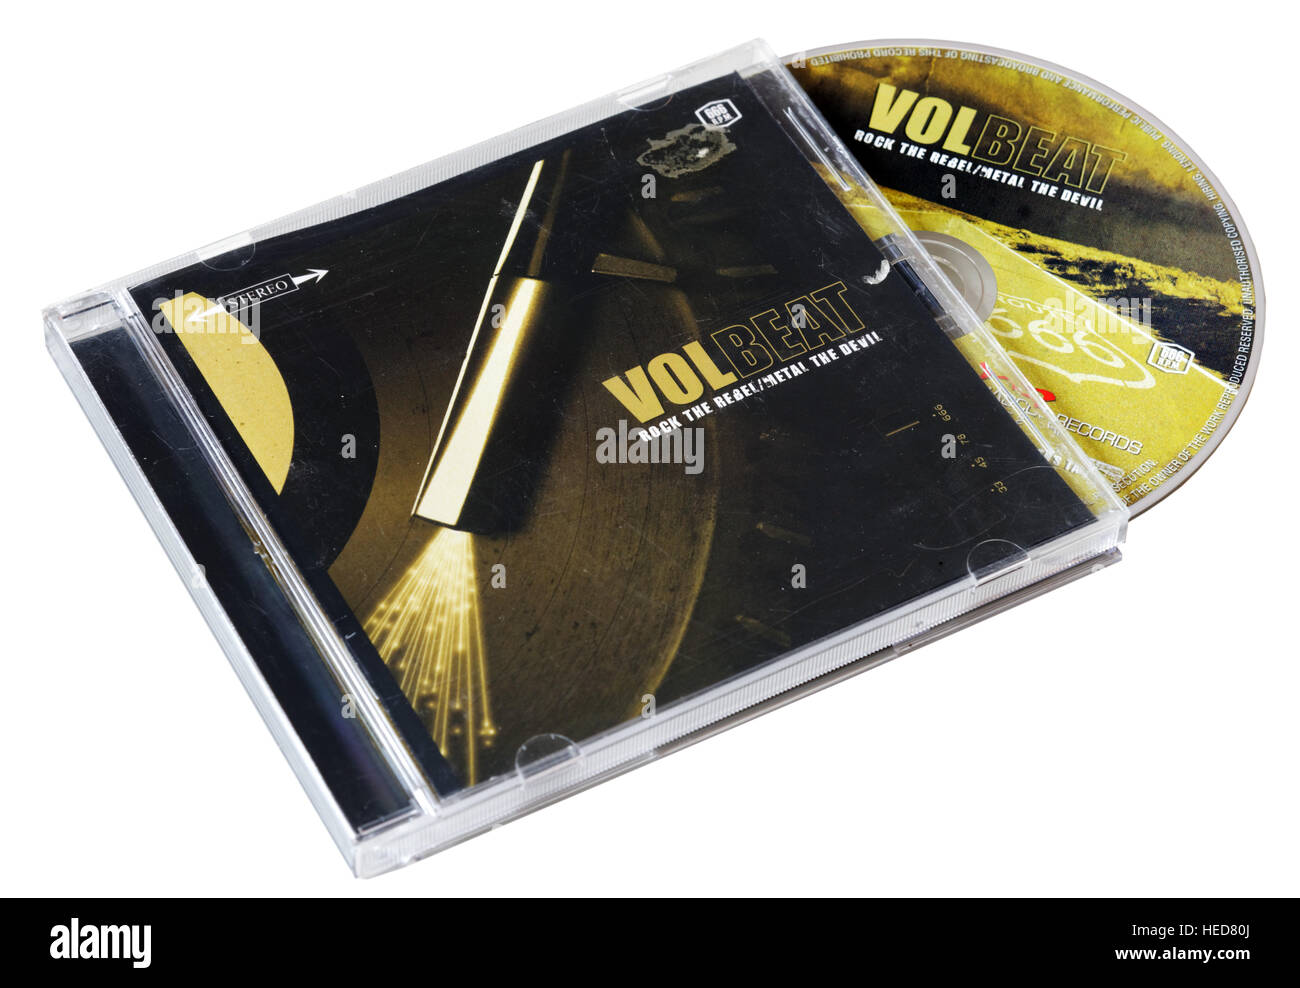 Volbeat Rock the Rebel/Metal the Devil CD Stock Photo